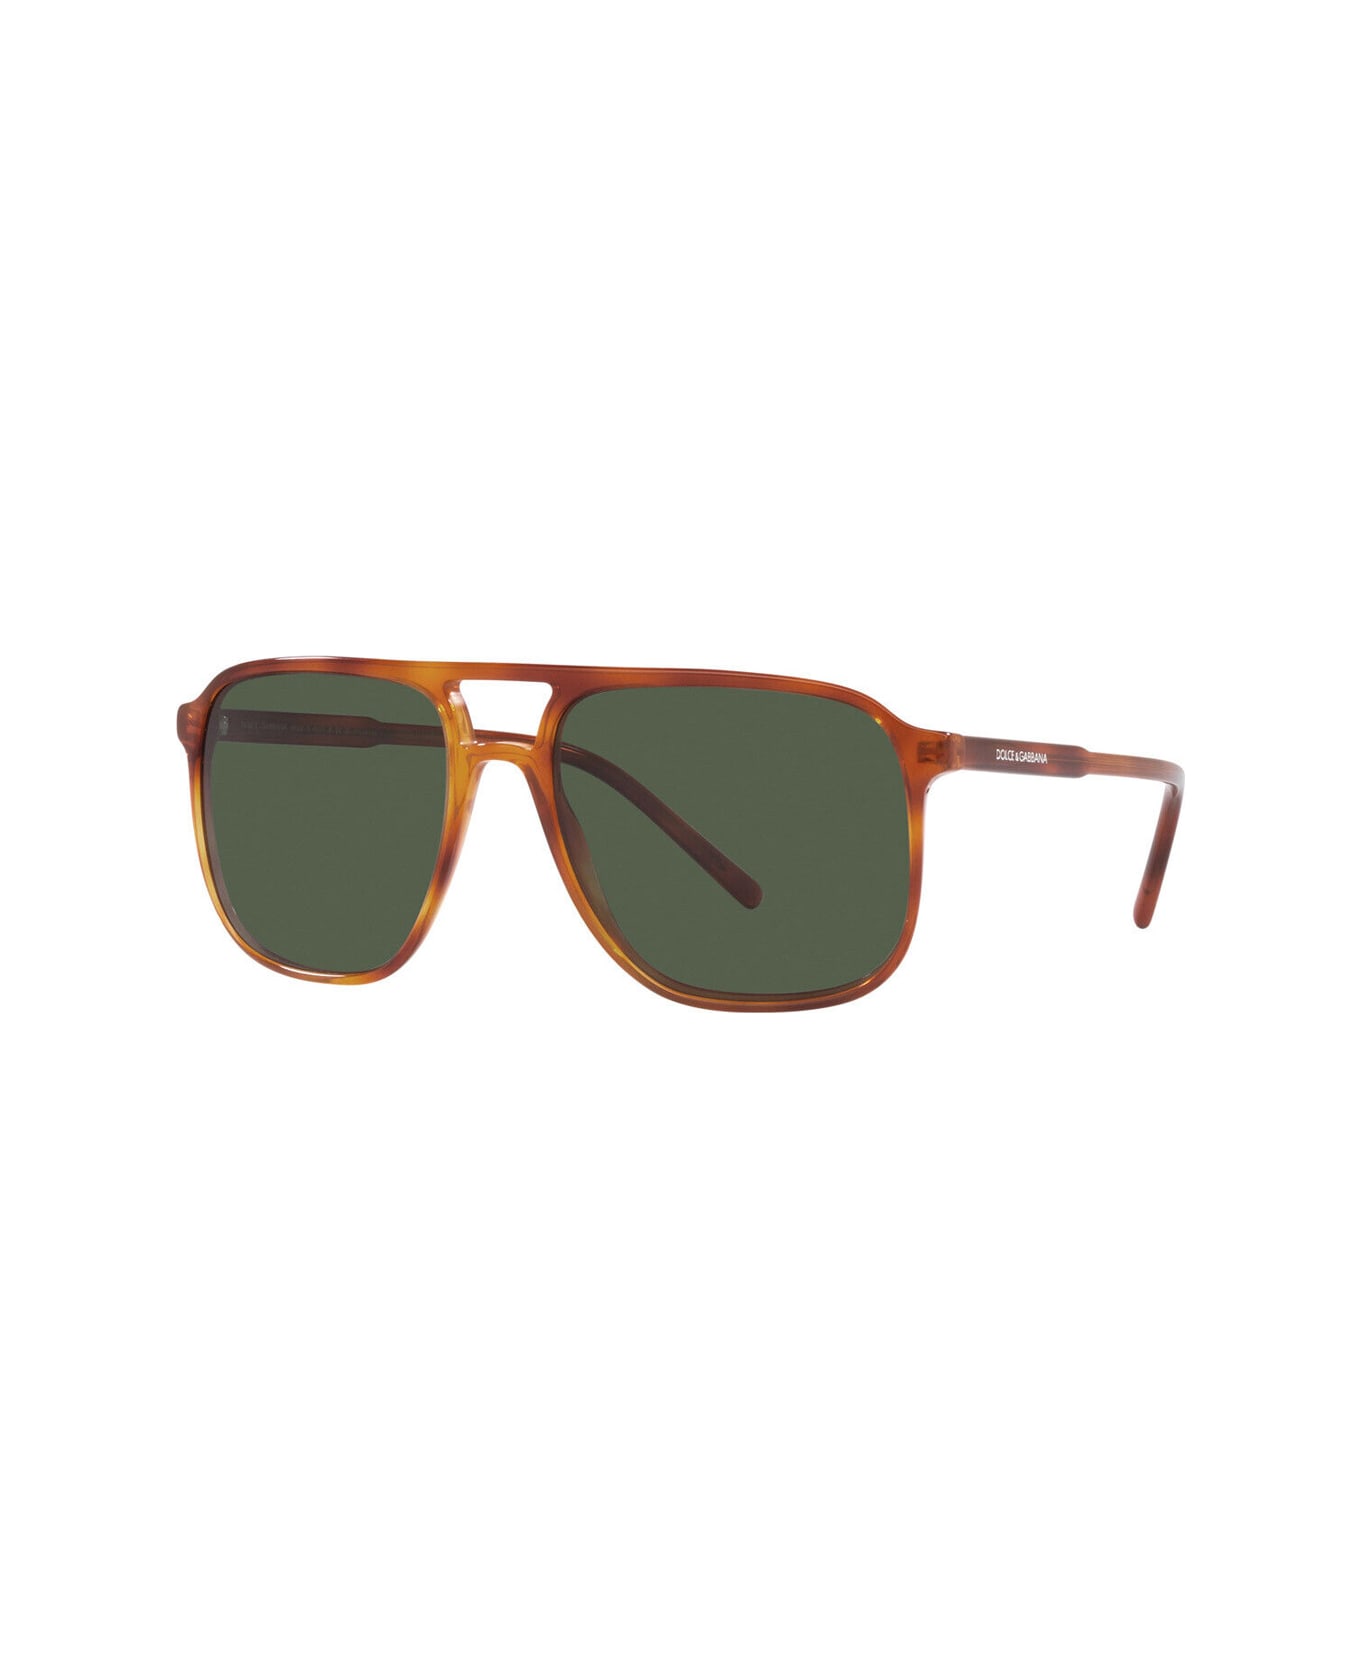 Dolce & Gabbana Eyewear Dg4423 705/9a Sunglasses - Arancione